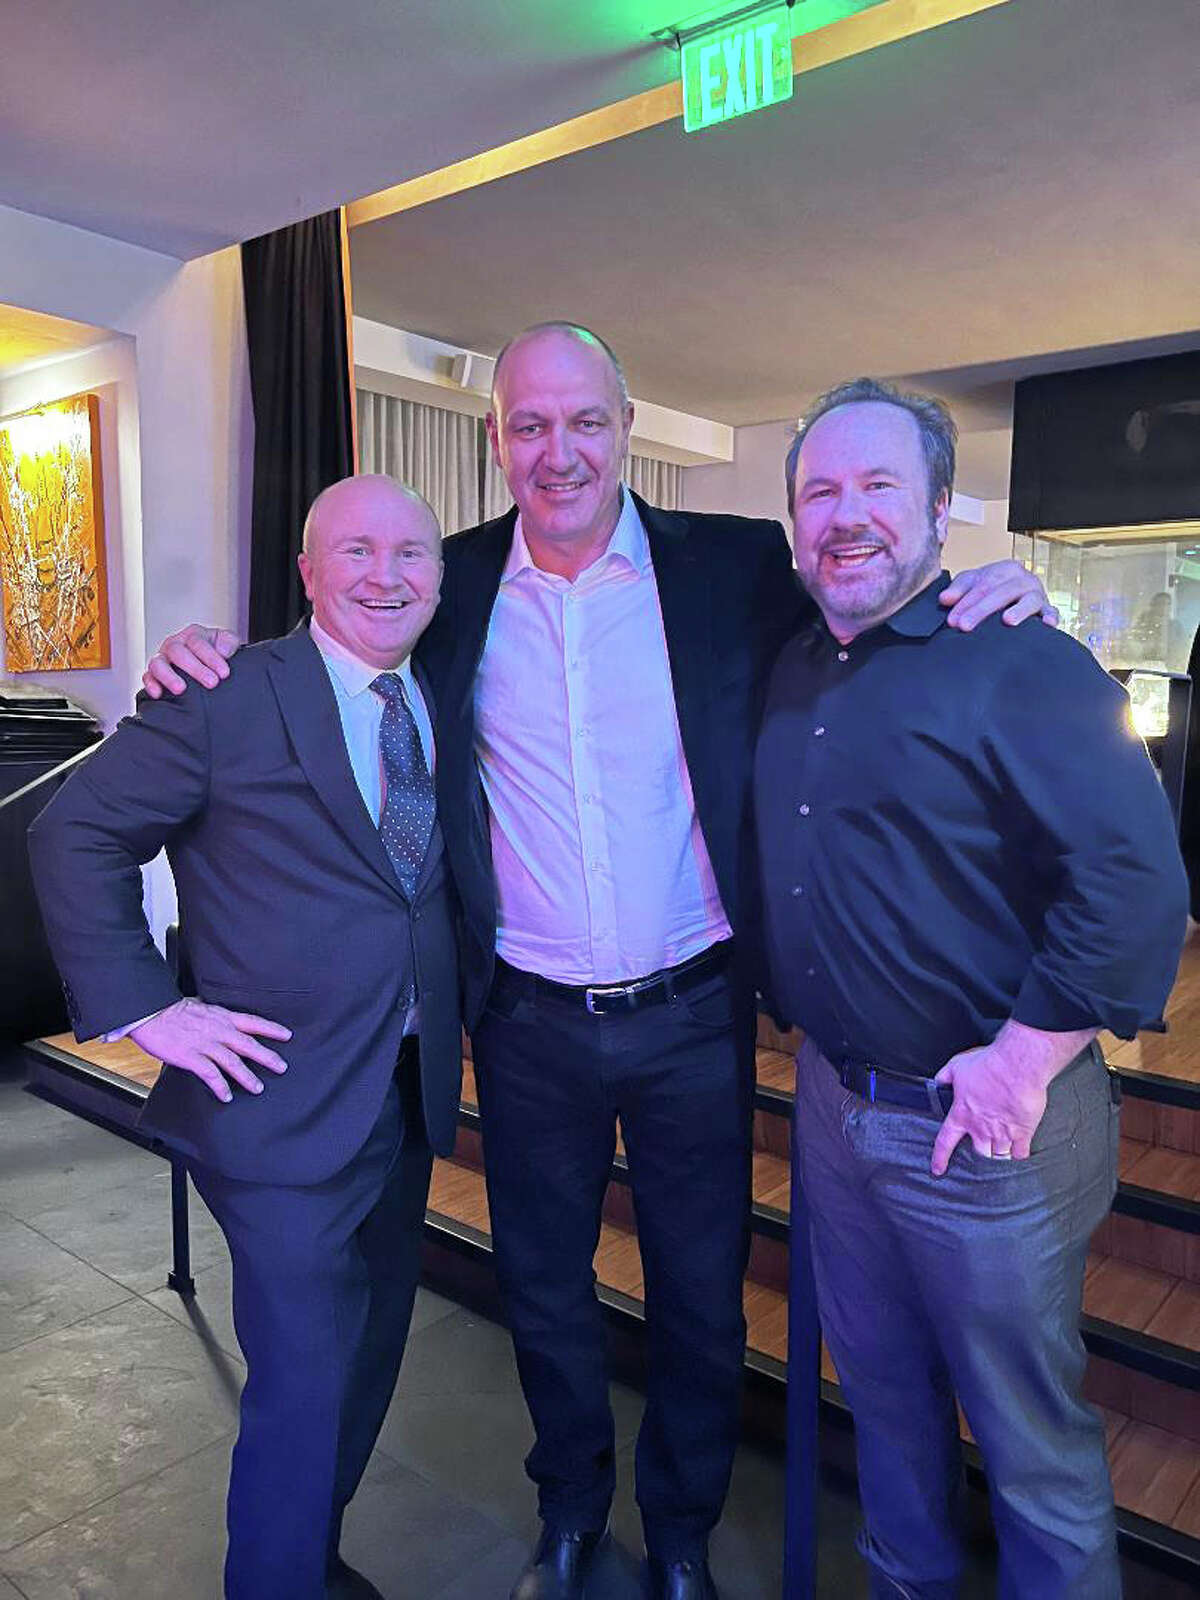 Tony Capasso of Tony's at the J House with NHL star Stephane Matteau and Brent Montgomery, CEO of Wheelhouse.